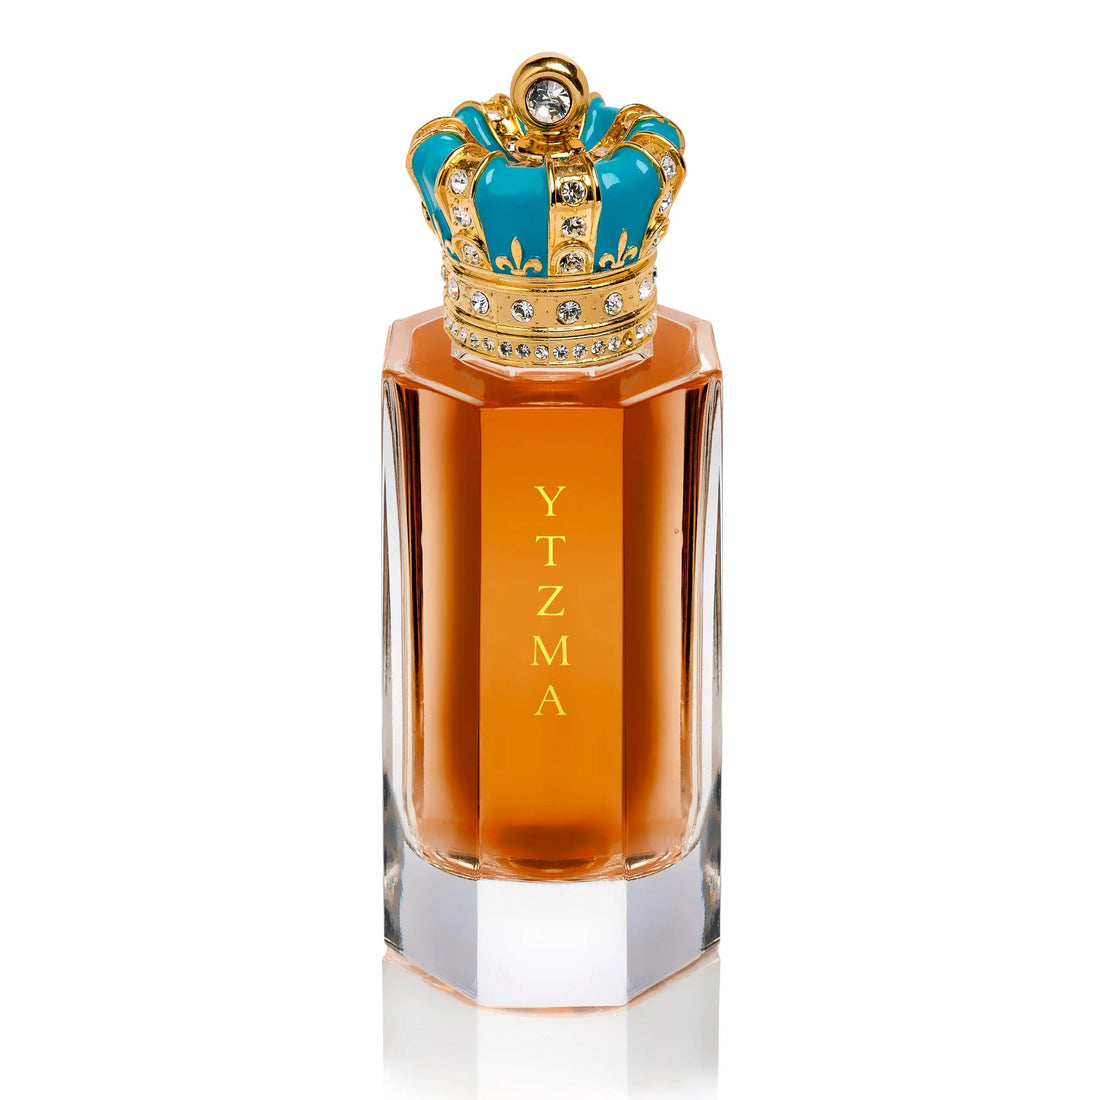 Ytzma Royal Crown - 100 ml